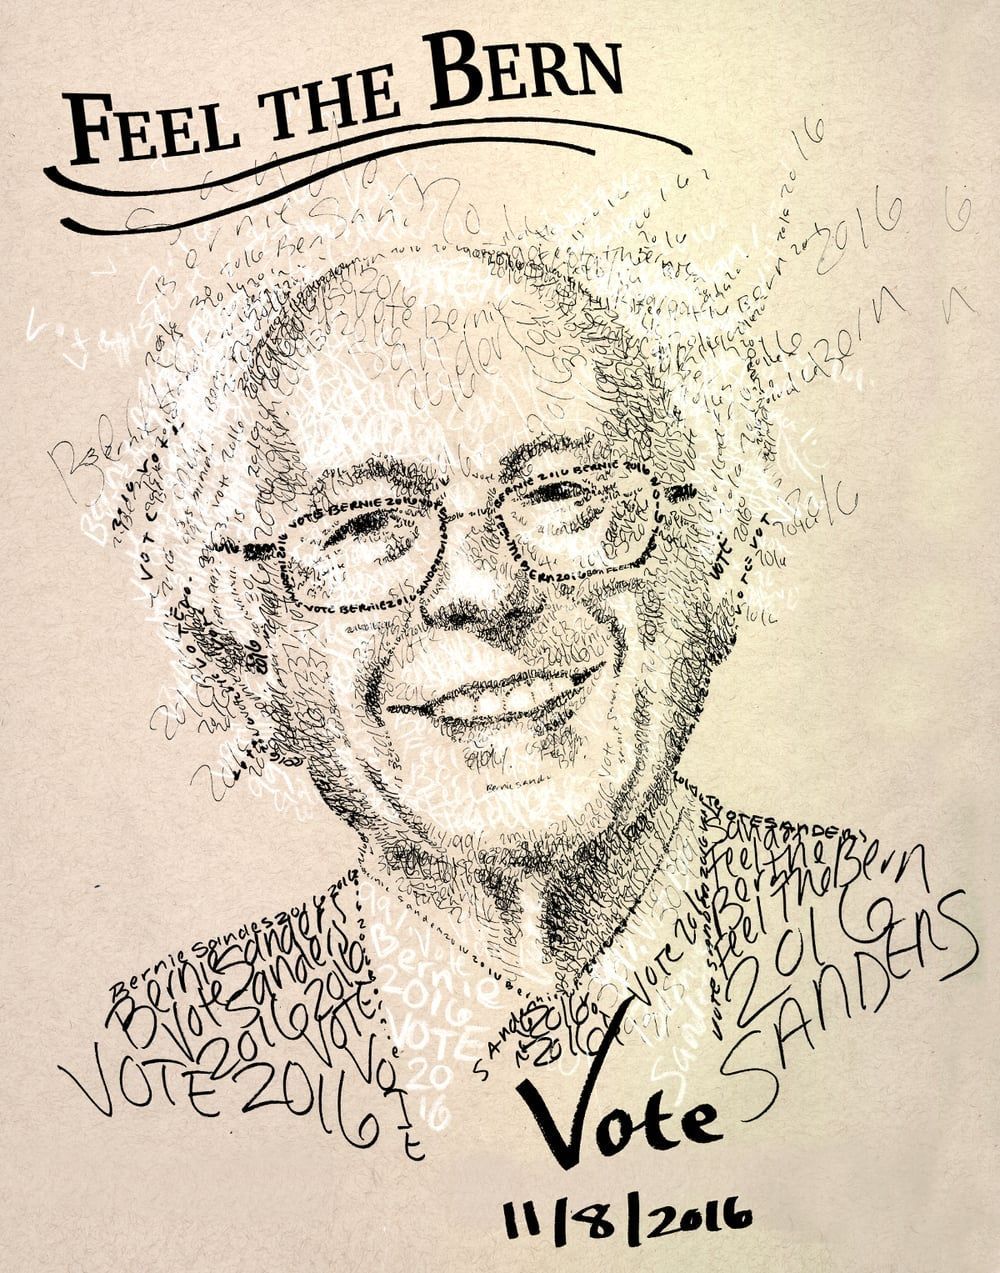 Feel The Bern - 90 of profits go to Bernie Campaign Fleeting States